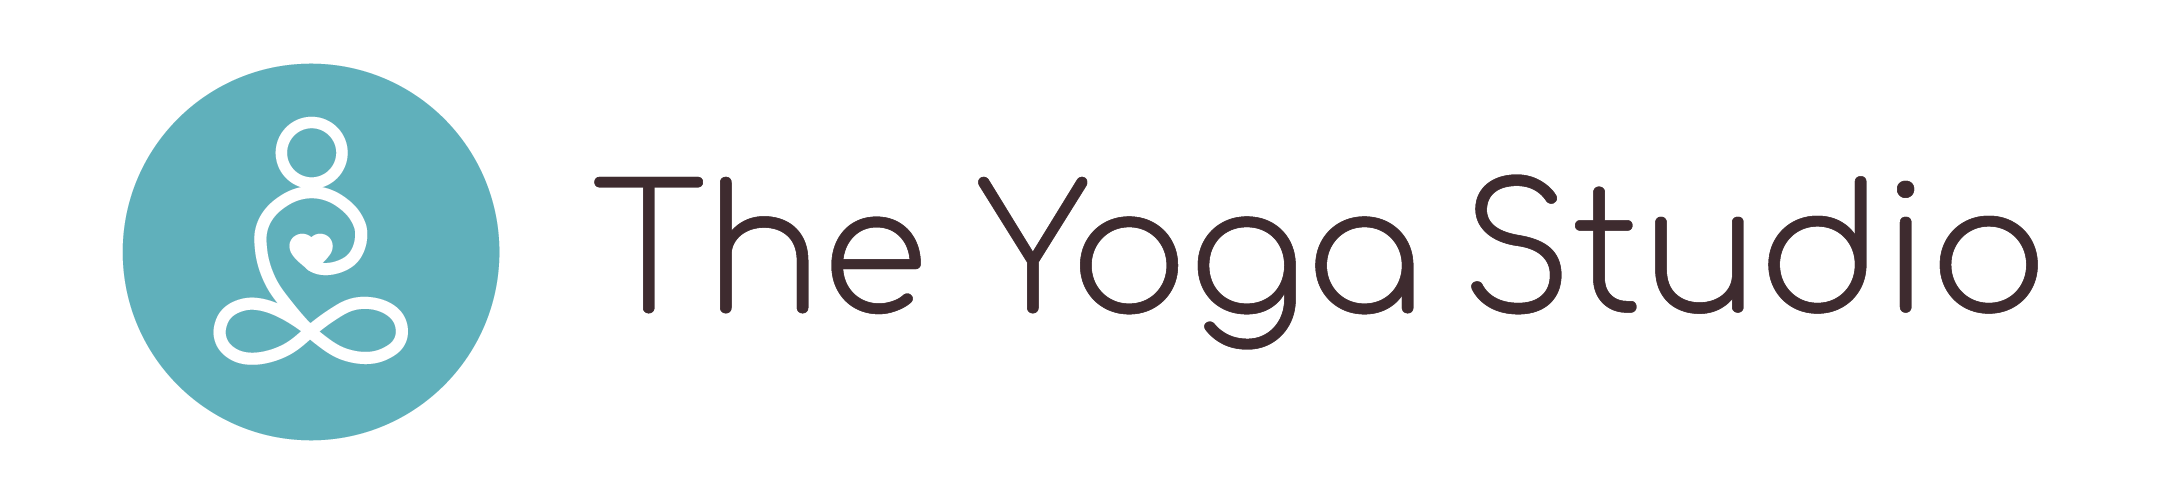 The Yoga Studio: Aerial & Traditional Yoga Classes San Jose